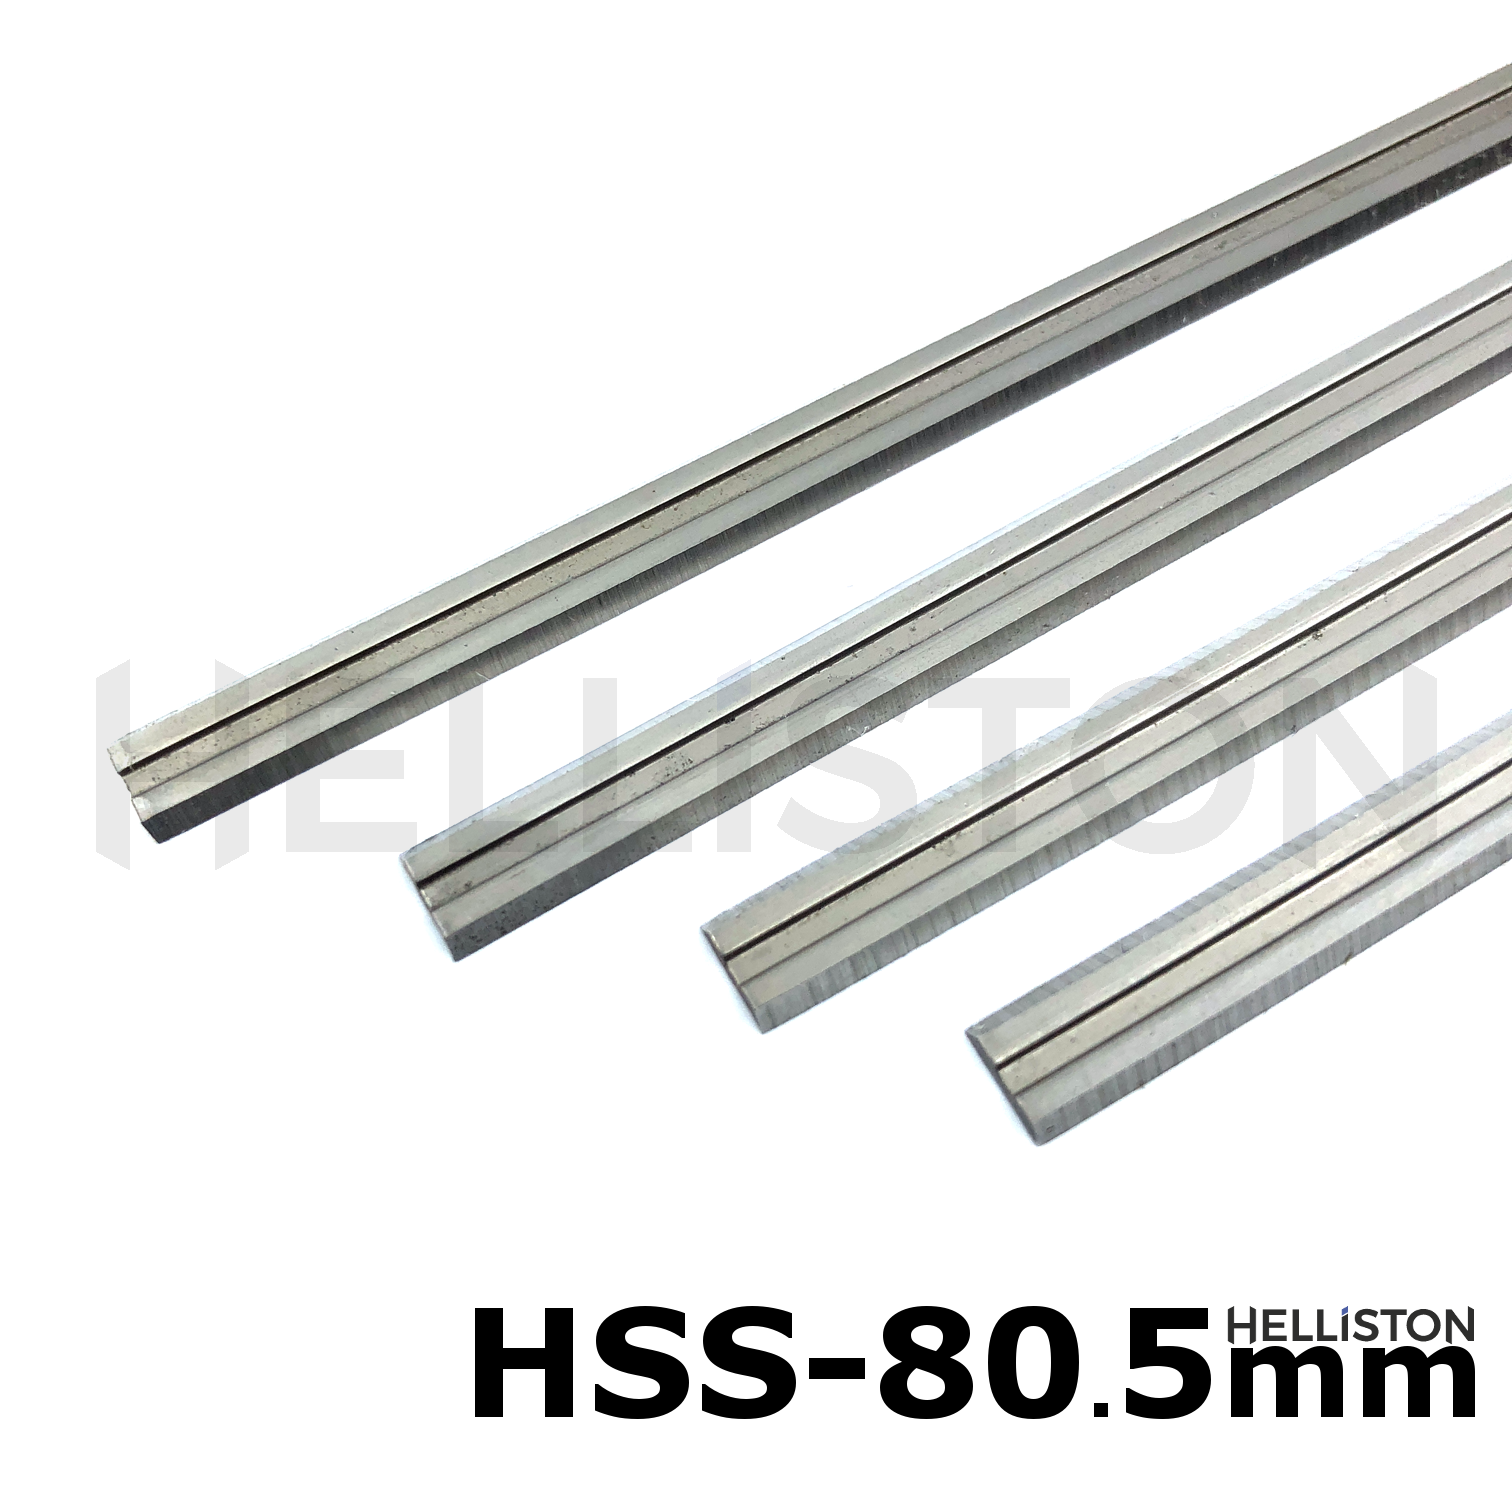 HSS Planer Blades, Reversible blades 80,5 mm, High-speed-steel, double-sided, for electrical planers, AEG 450, Dewalt DW676K, ELU MFF40, MF8F80, MFF81